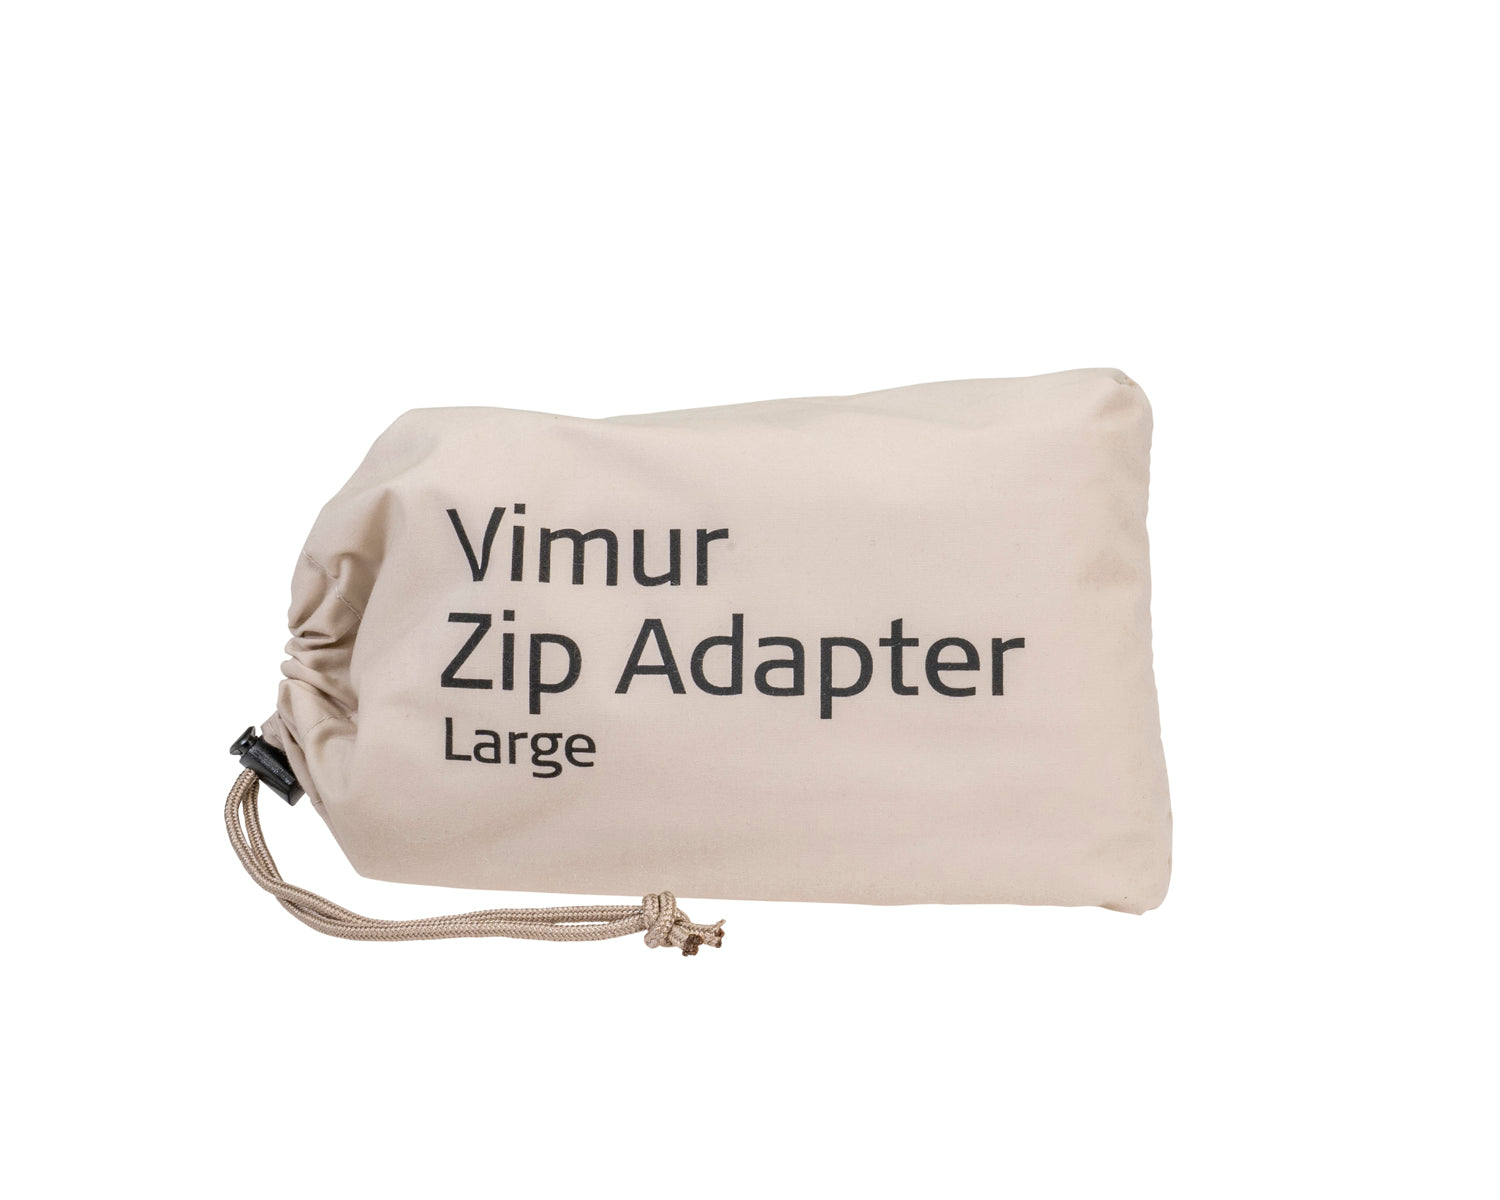 Vimur Zip Adapter Large - Technical Cotton, Natural